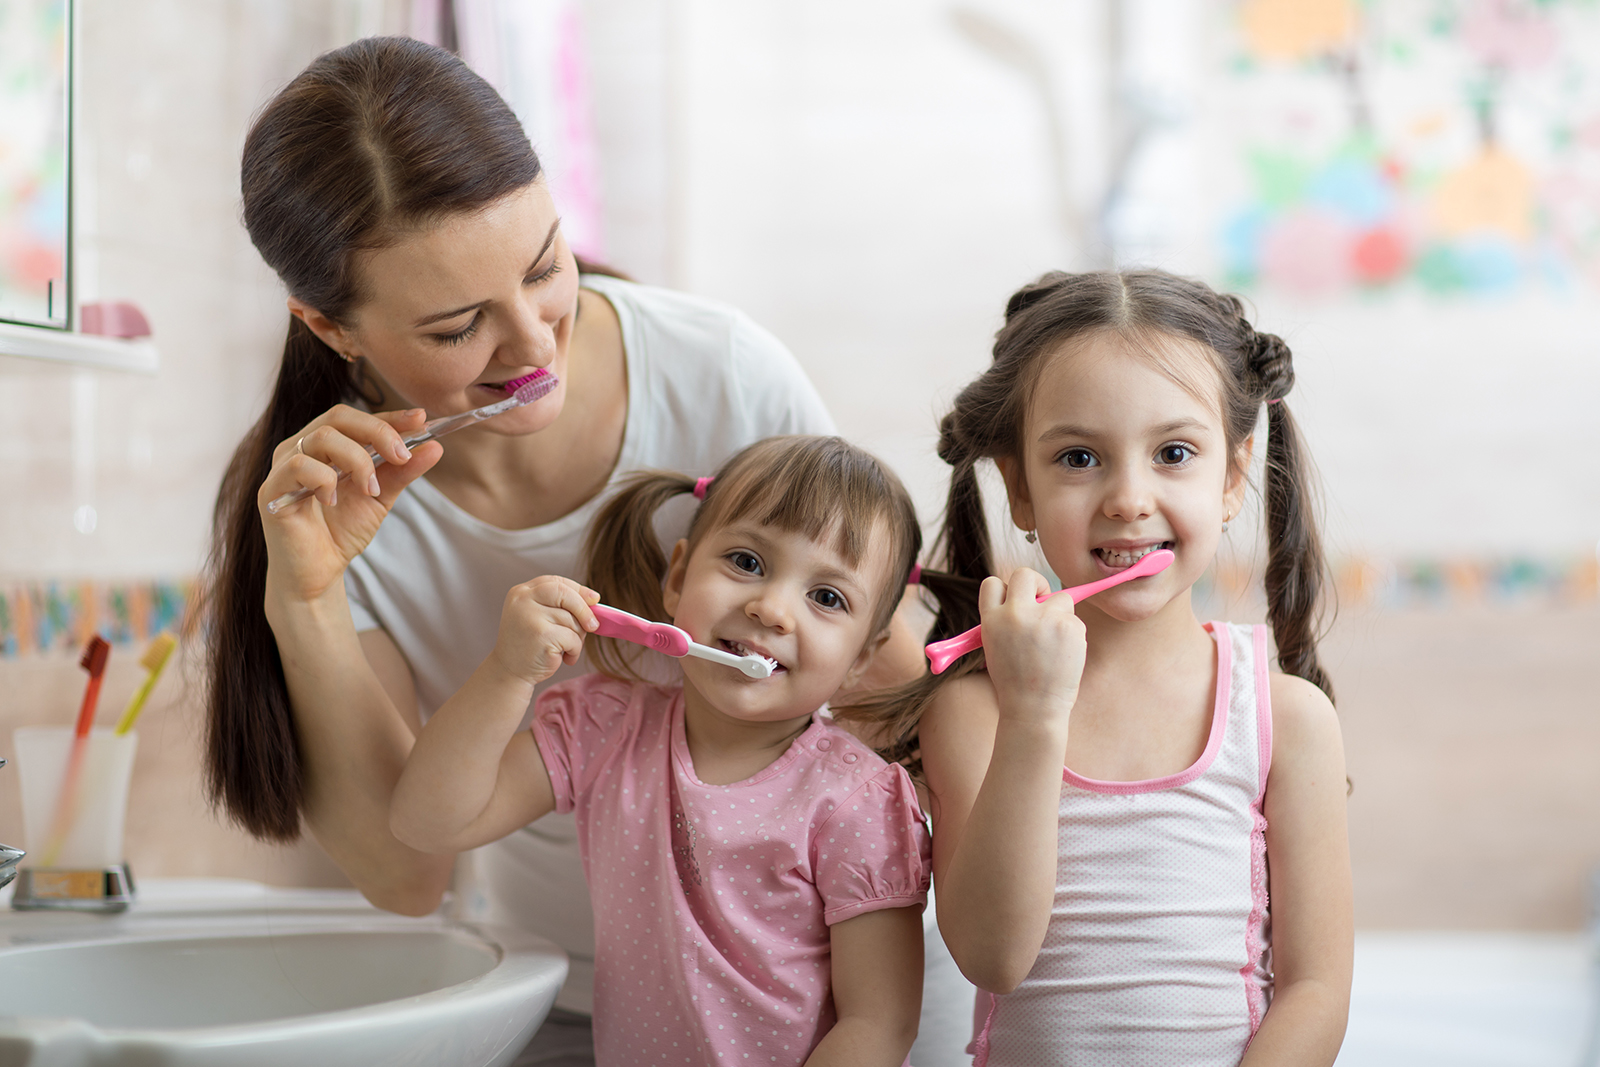 Ask Your Forney Dentist: October is National Dental Hygiene Month